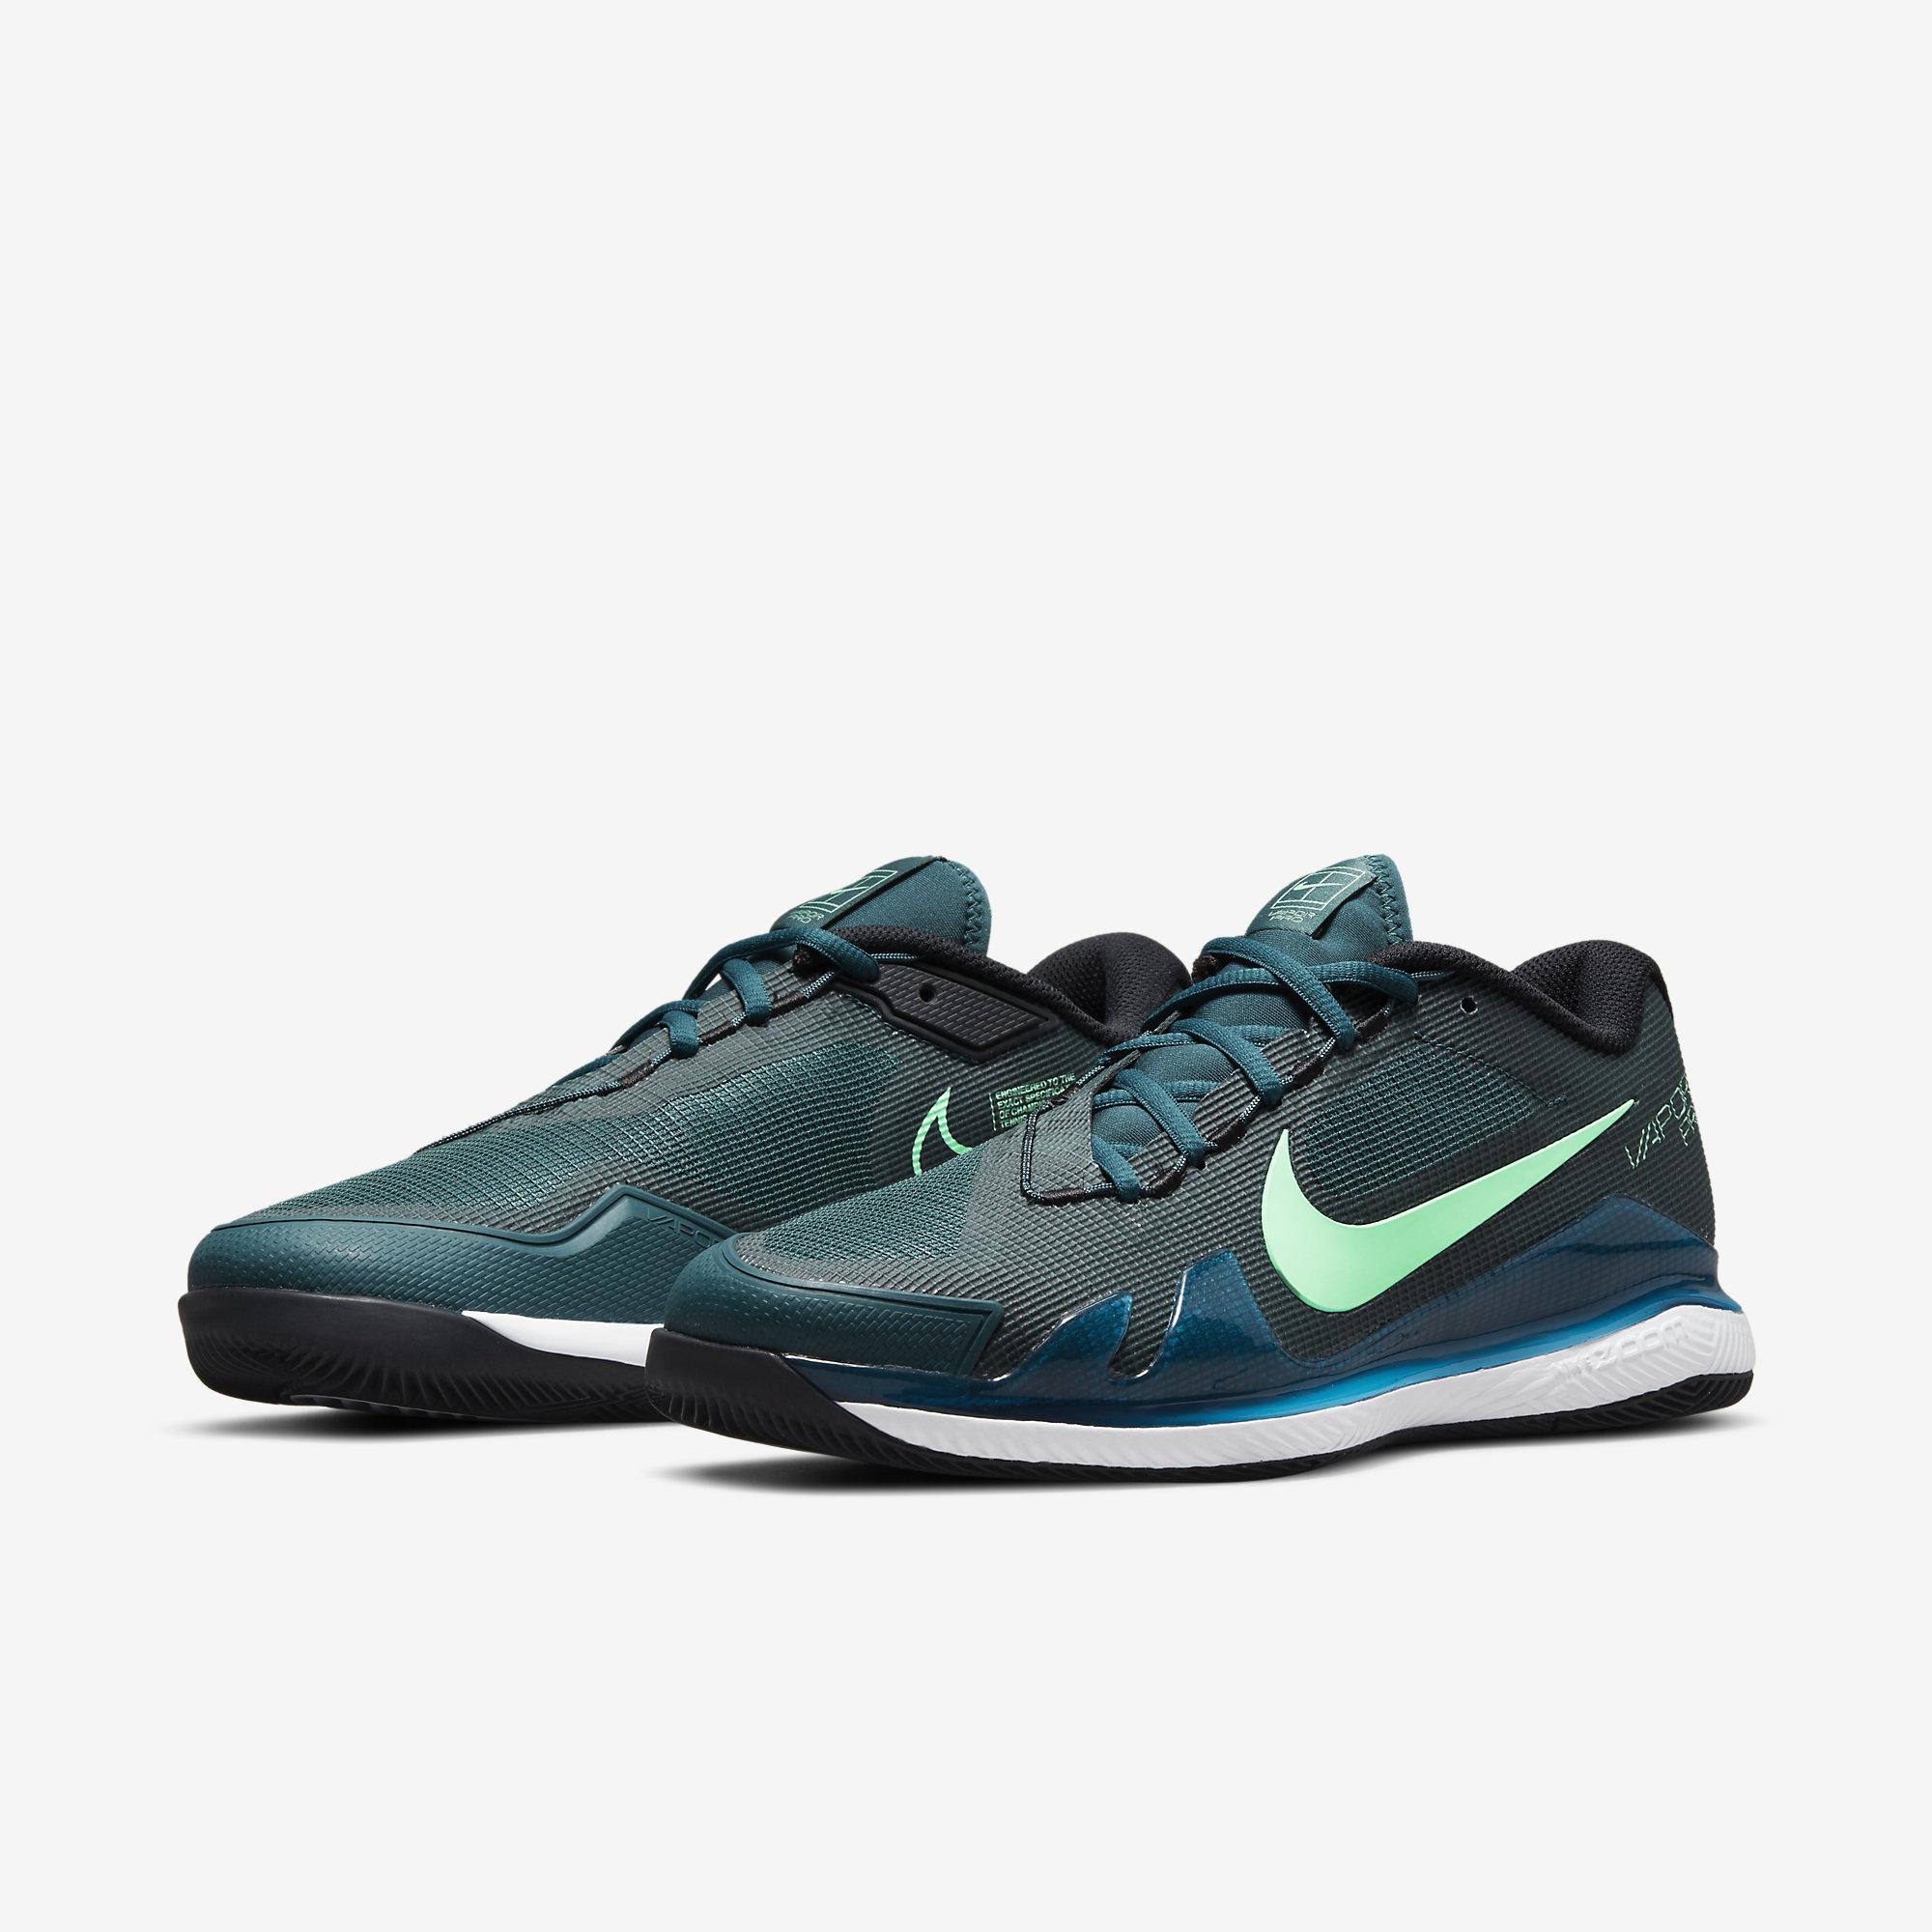 Nike Mens Air Zoom Vapor Pro Tennis Shoes - Dark Teal Green ...